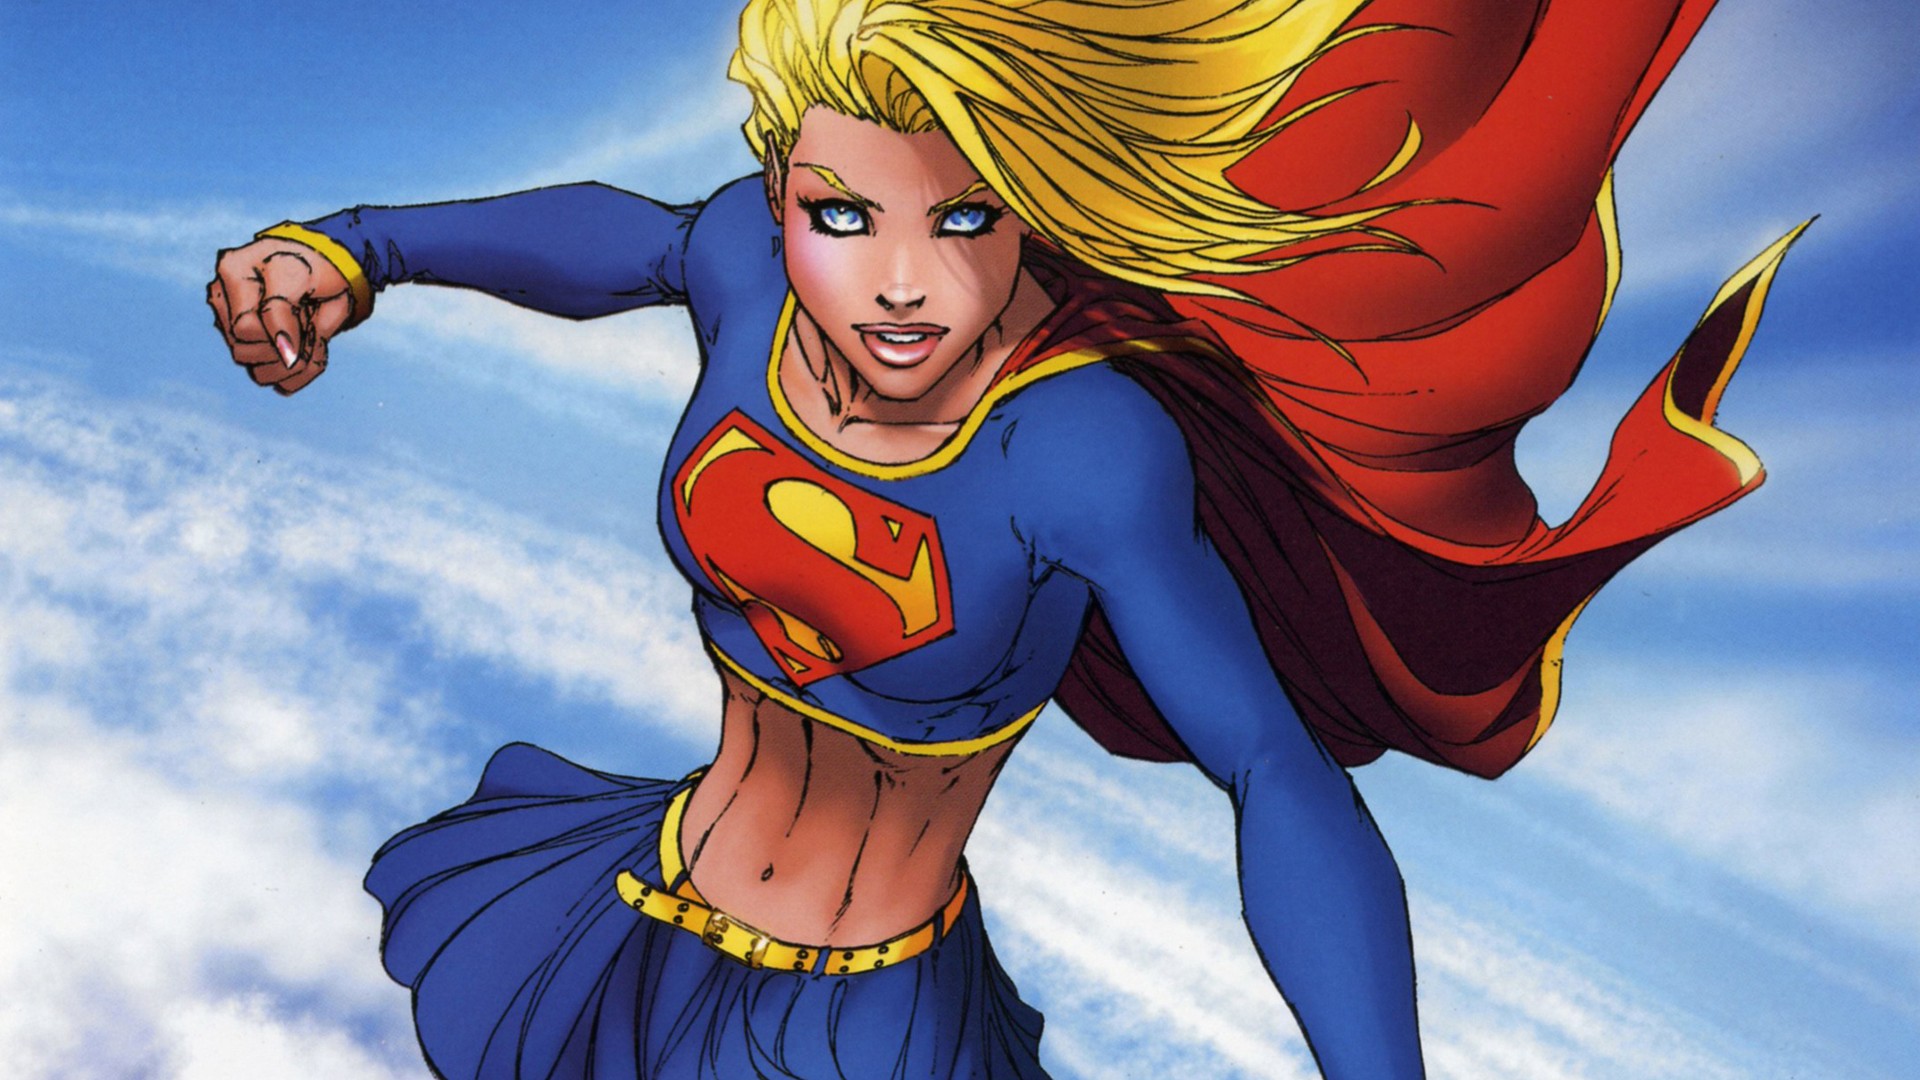 Supergirl Comics DC Comics Illustration Superhero Michael Turner 1920x1080